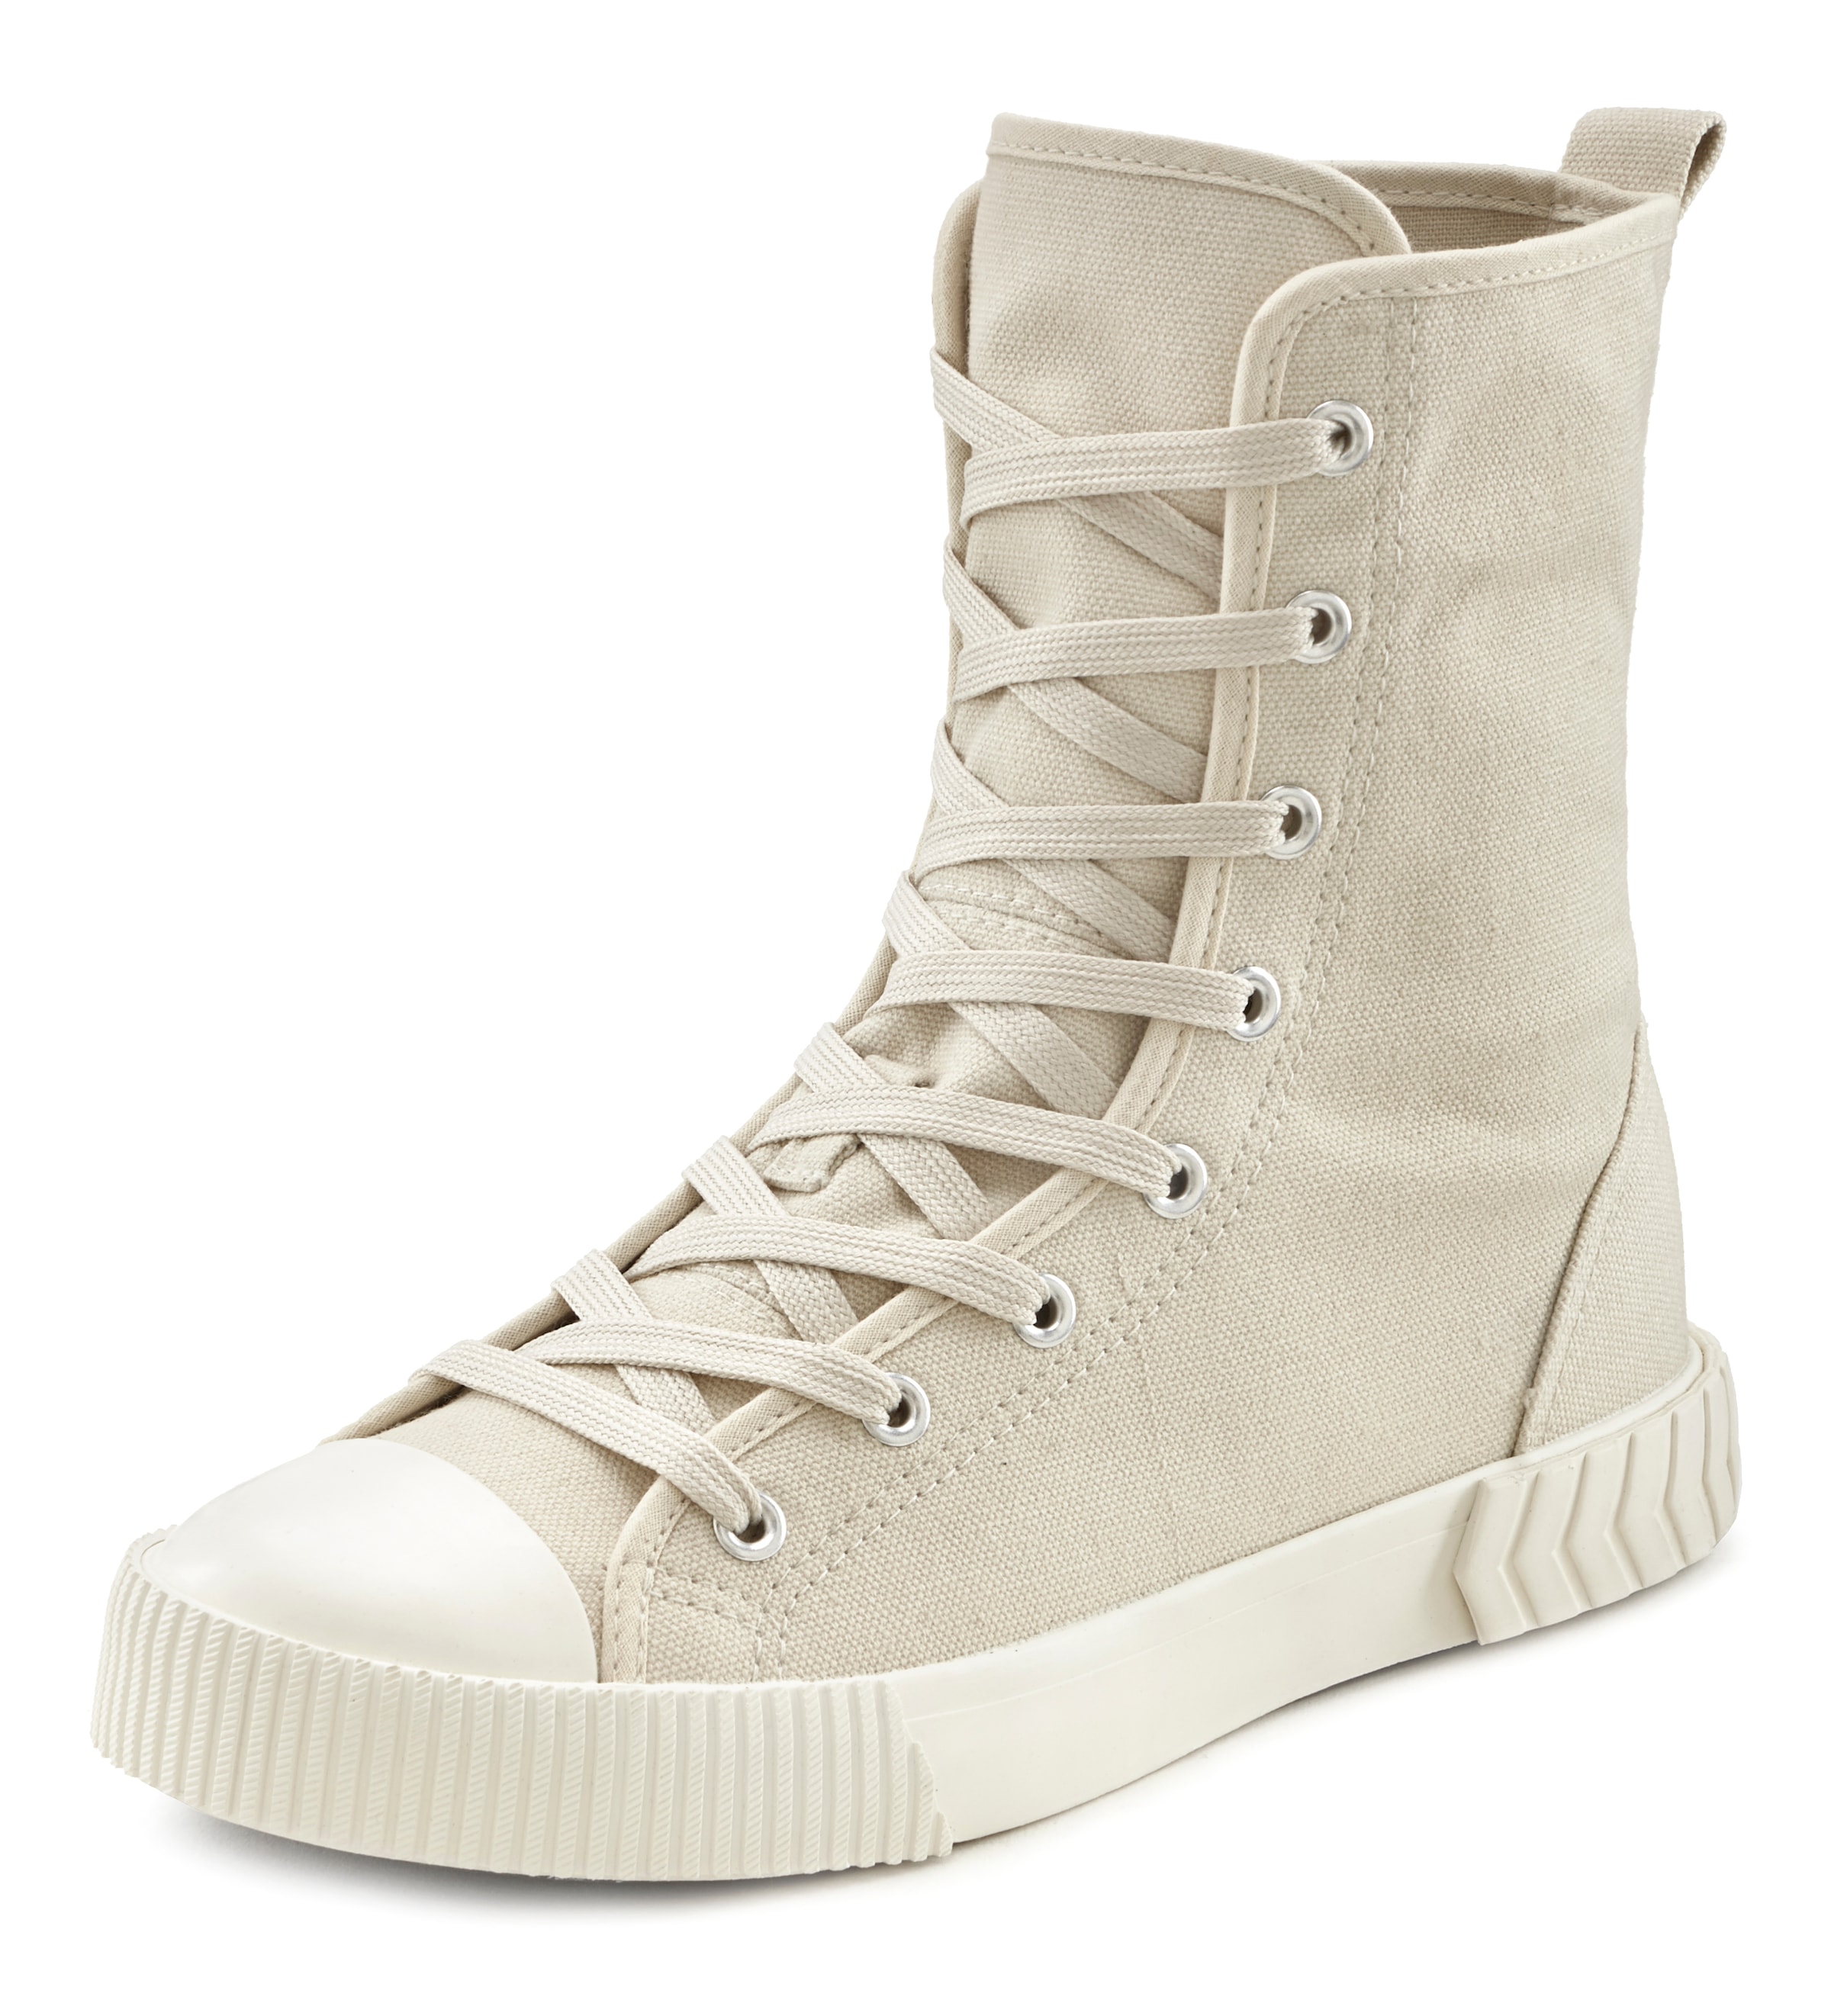 Stiefelette, im Combat Look, High Top Sneaker, Schnürschuh, Textil-Boots